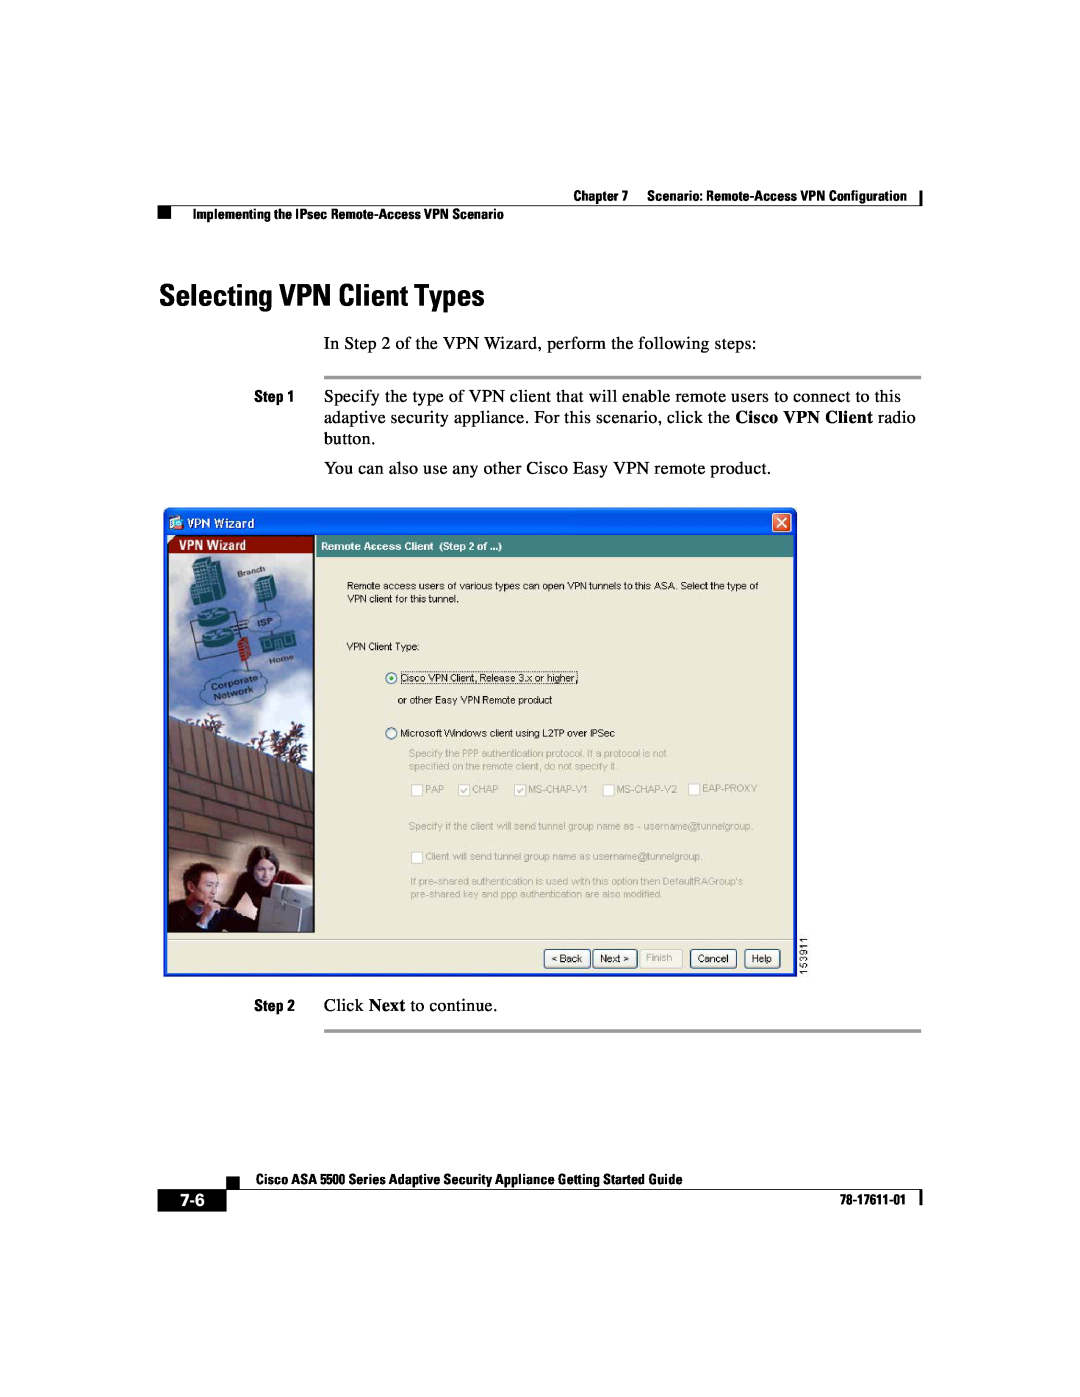 Cisco Systems ASA 5500 manual Selecting VPN Client Types 